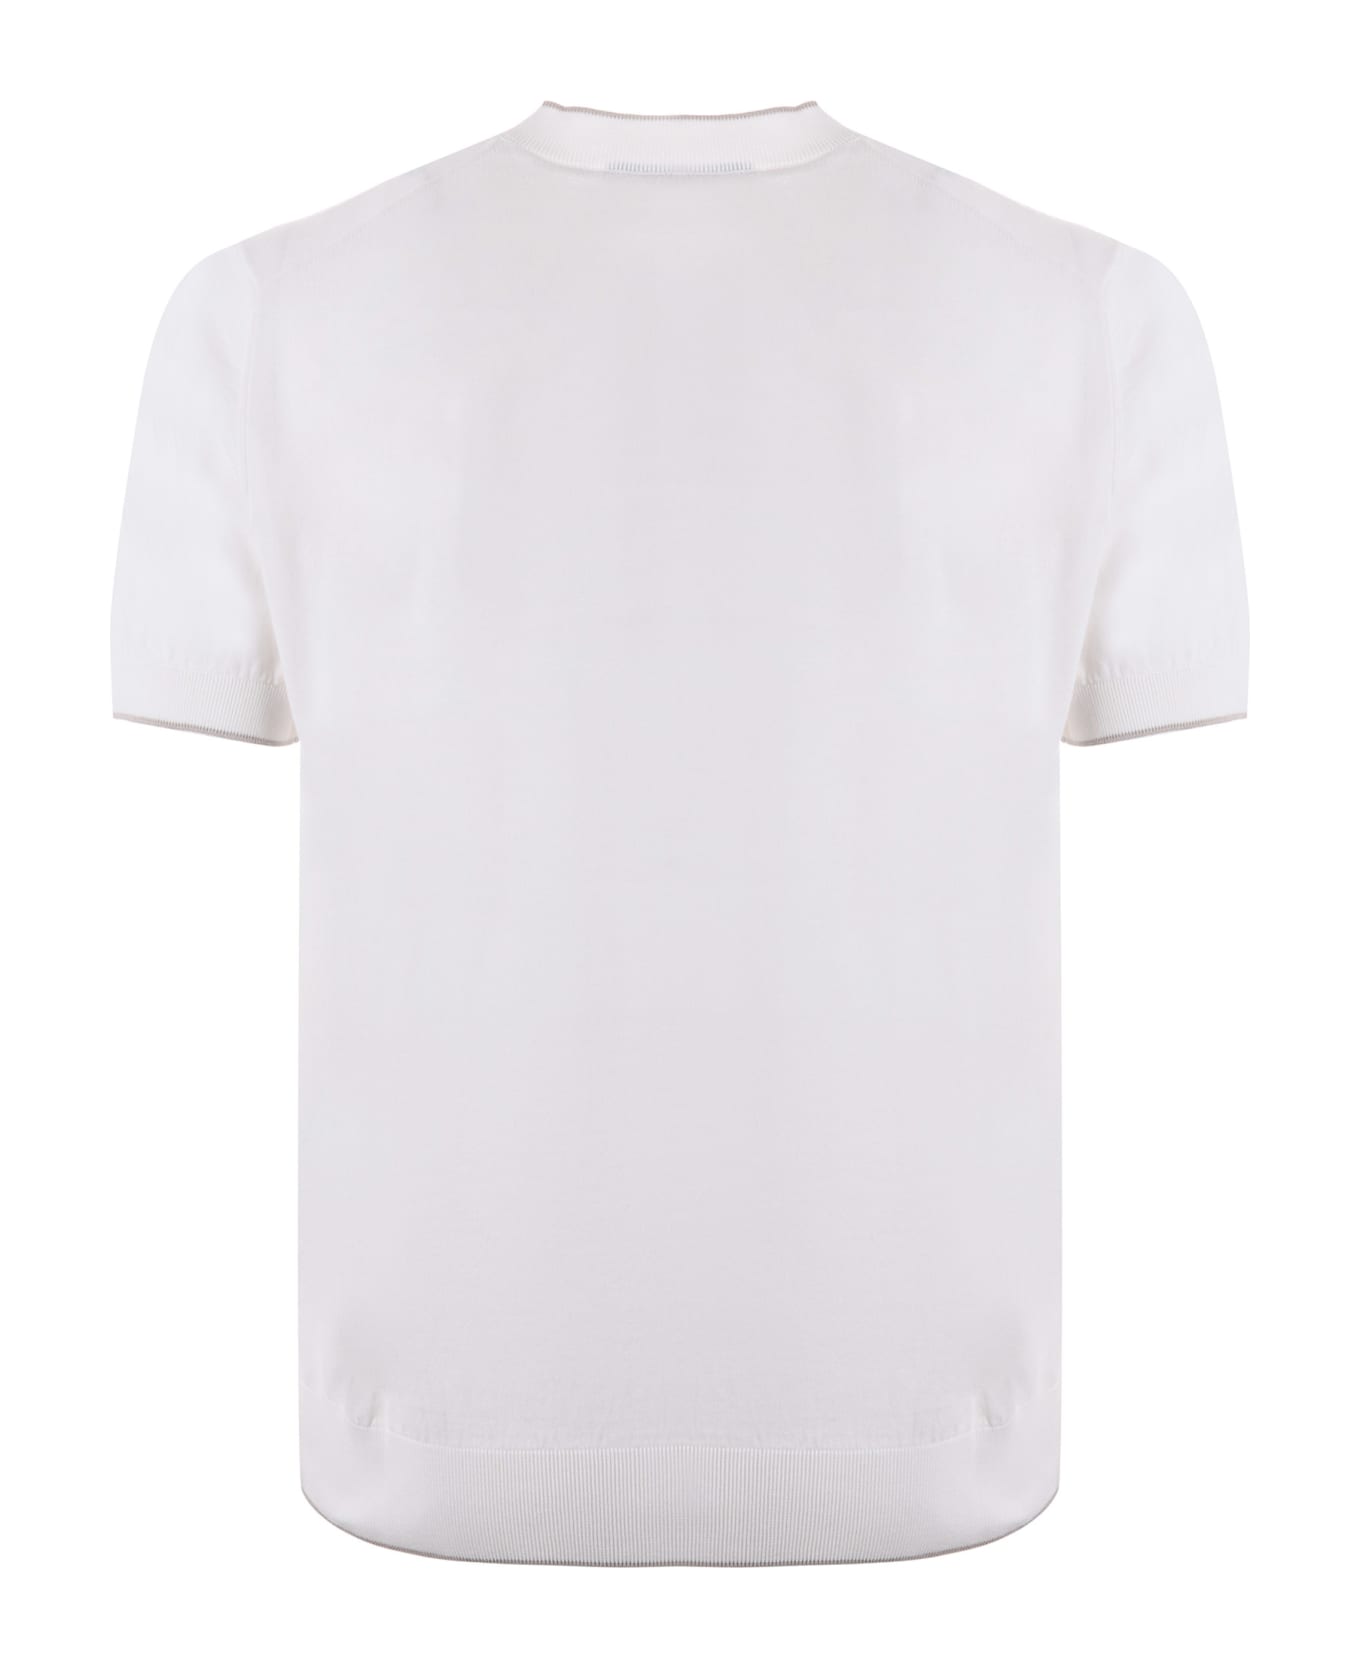 Paolo Pecora T-shirt Cotton Thread - Bianco シャツ